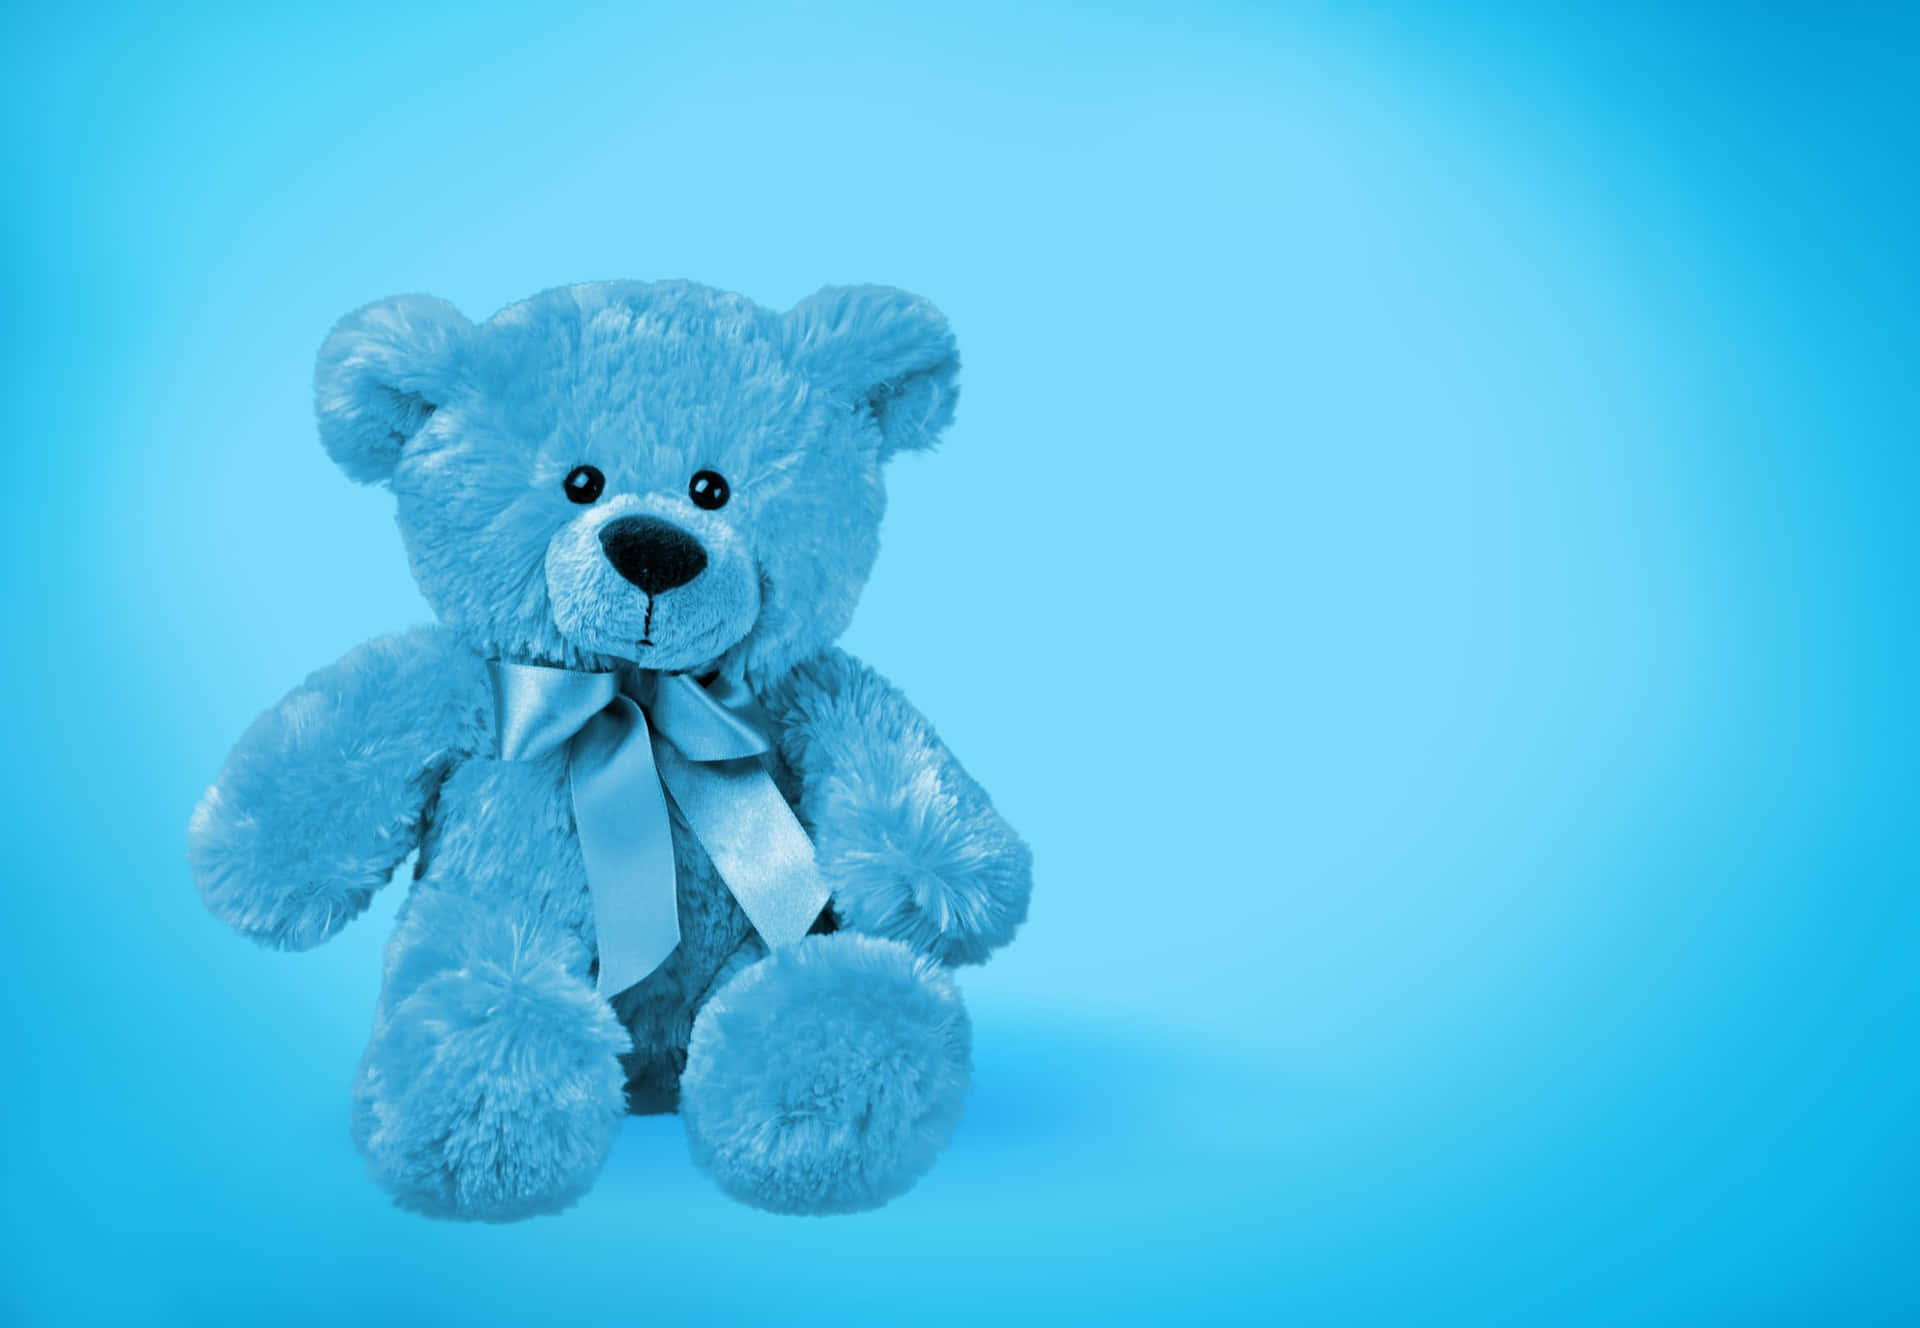 A Blue Teddy Bear On A Blue Background